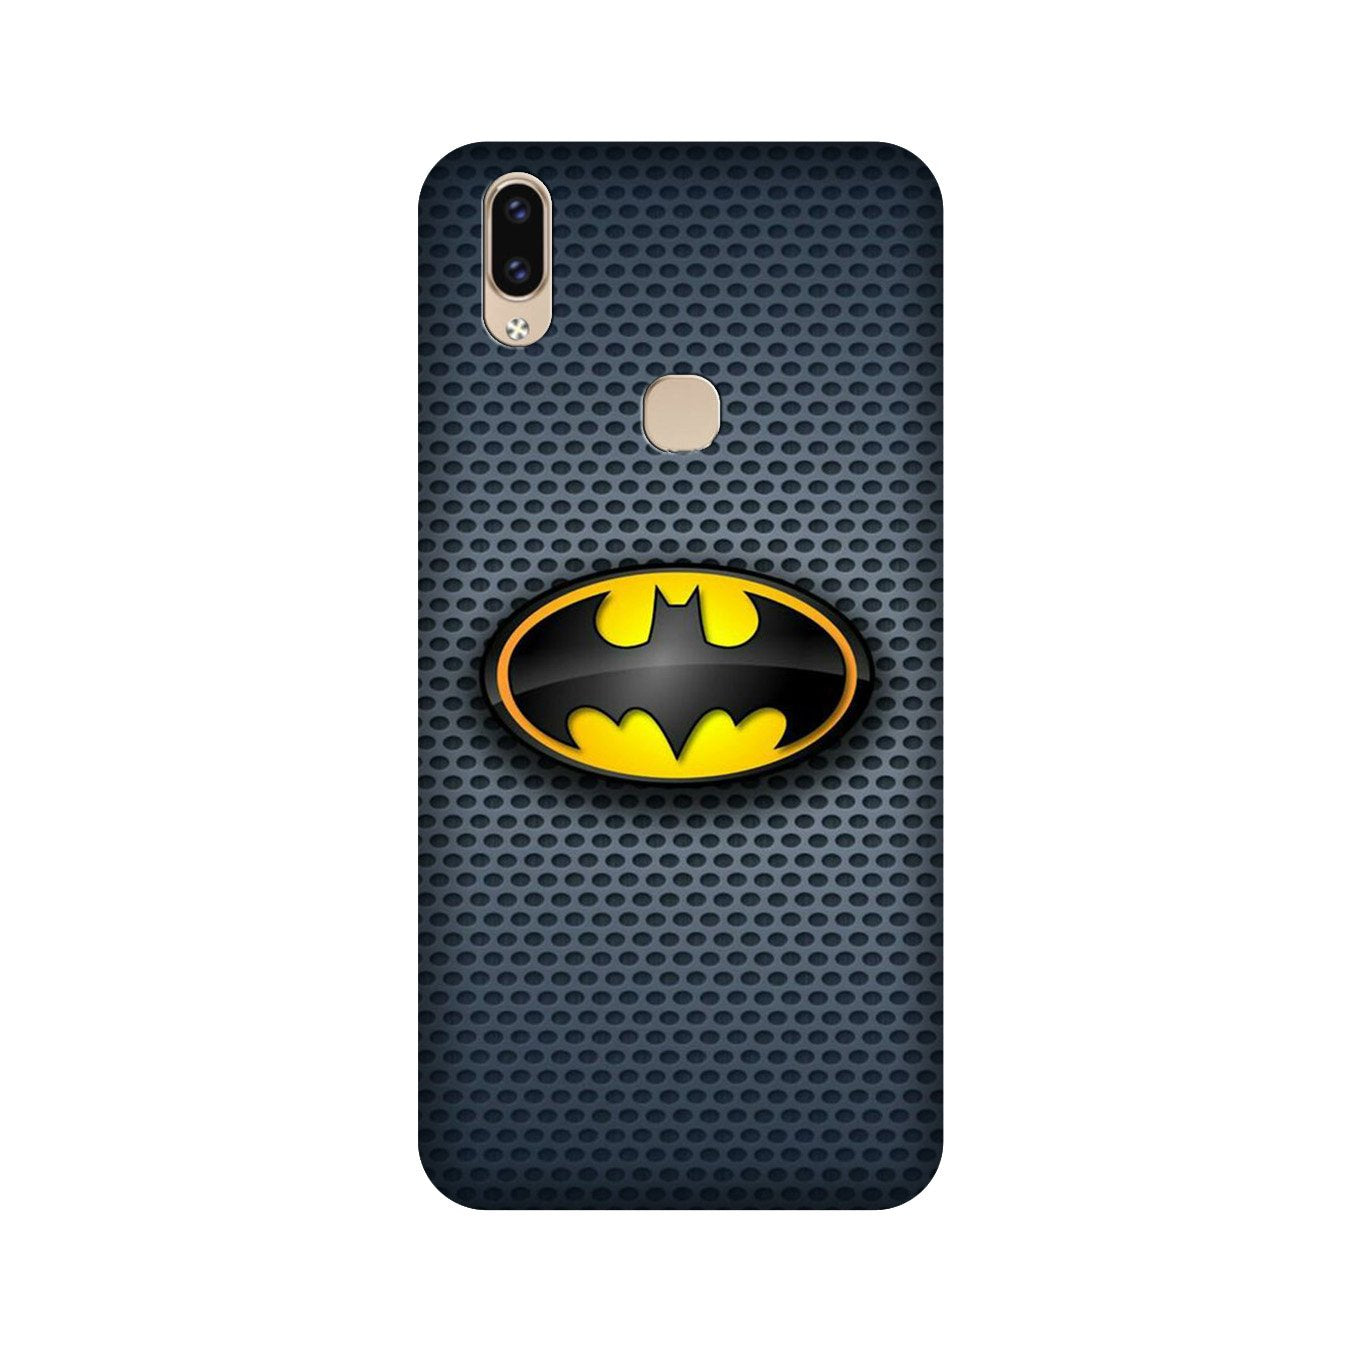 Batman Case for Vivo V9 pro (Design No. 244)